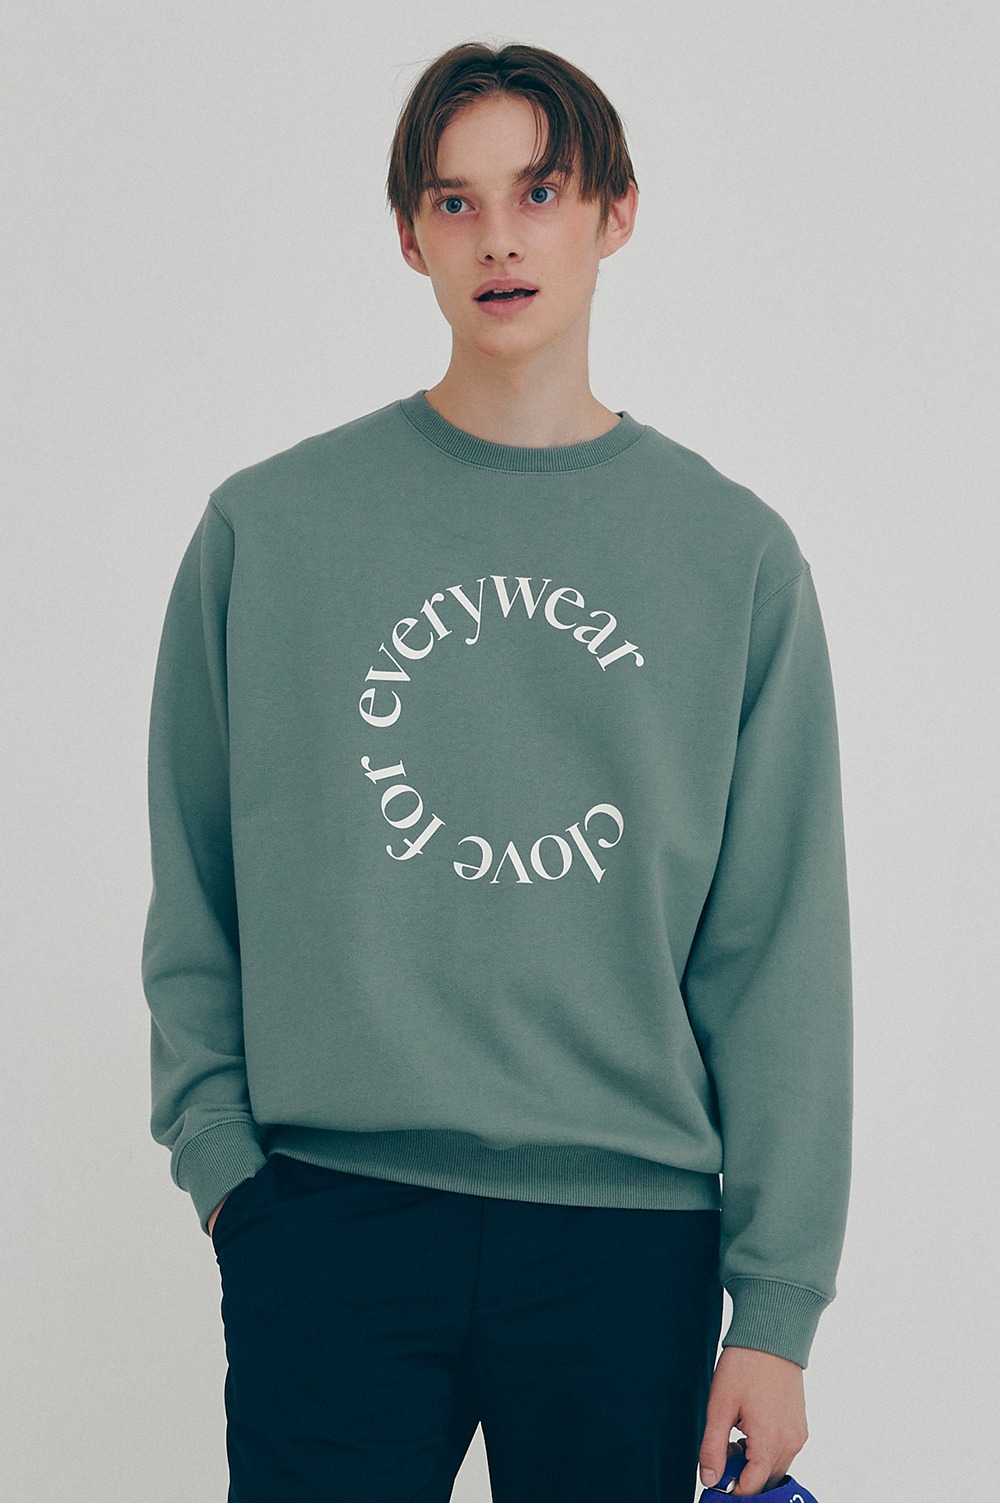 clove - [FW21 clove] Everywear Sweatshirt (Khaki)